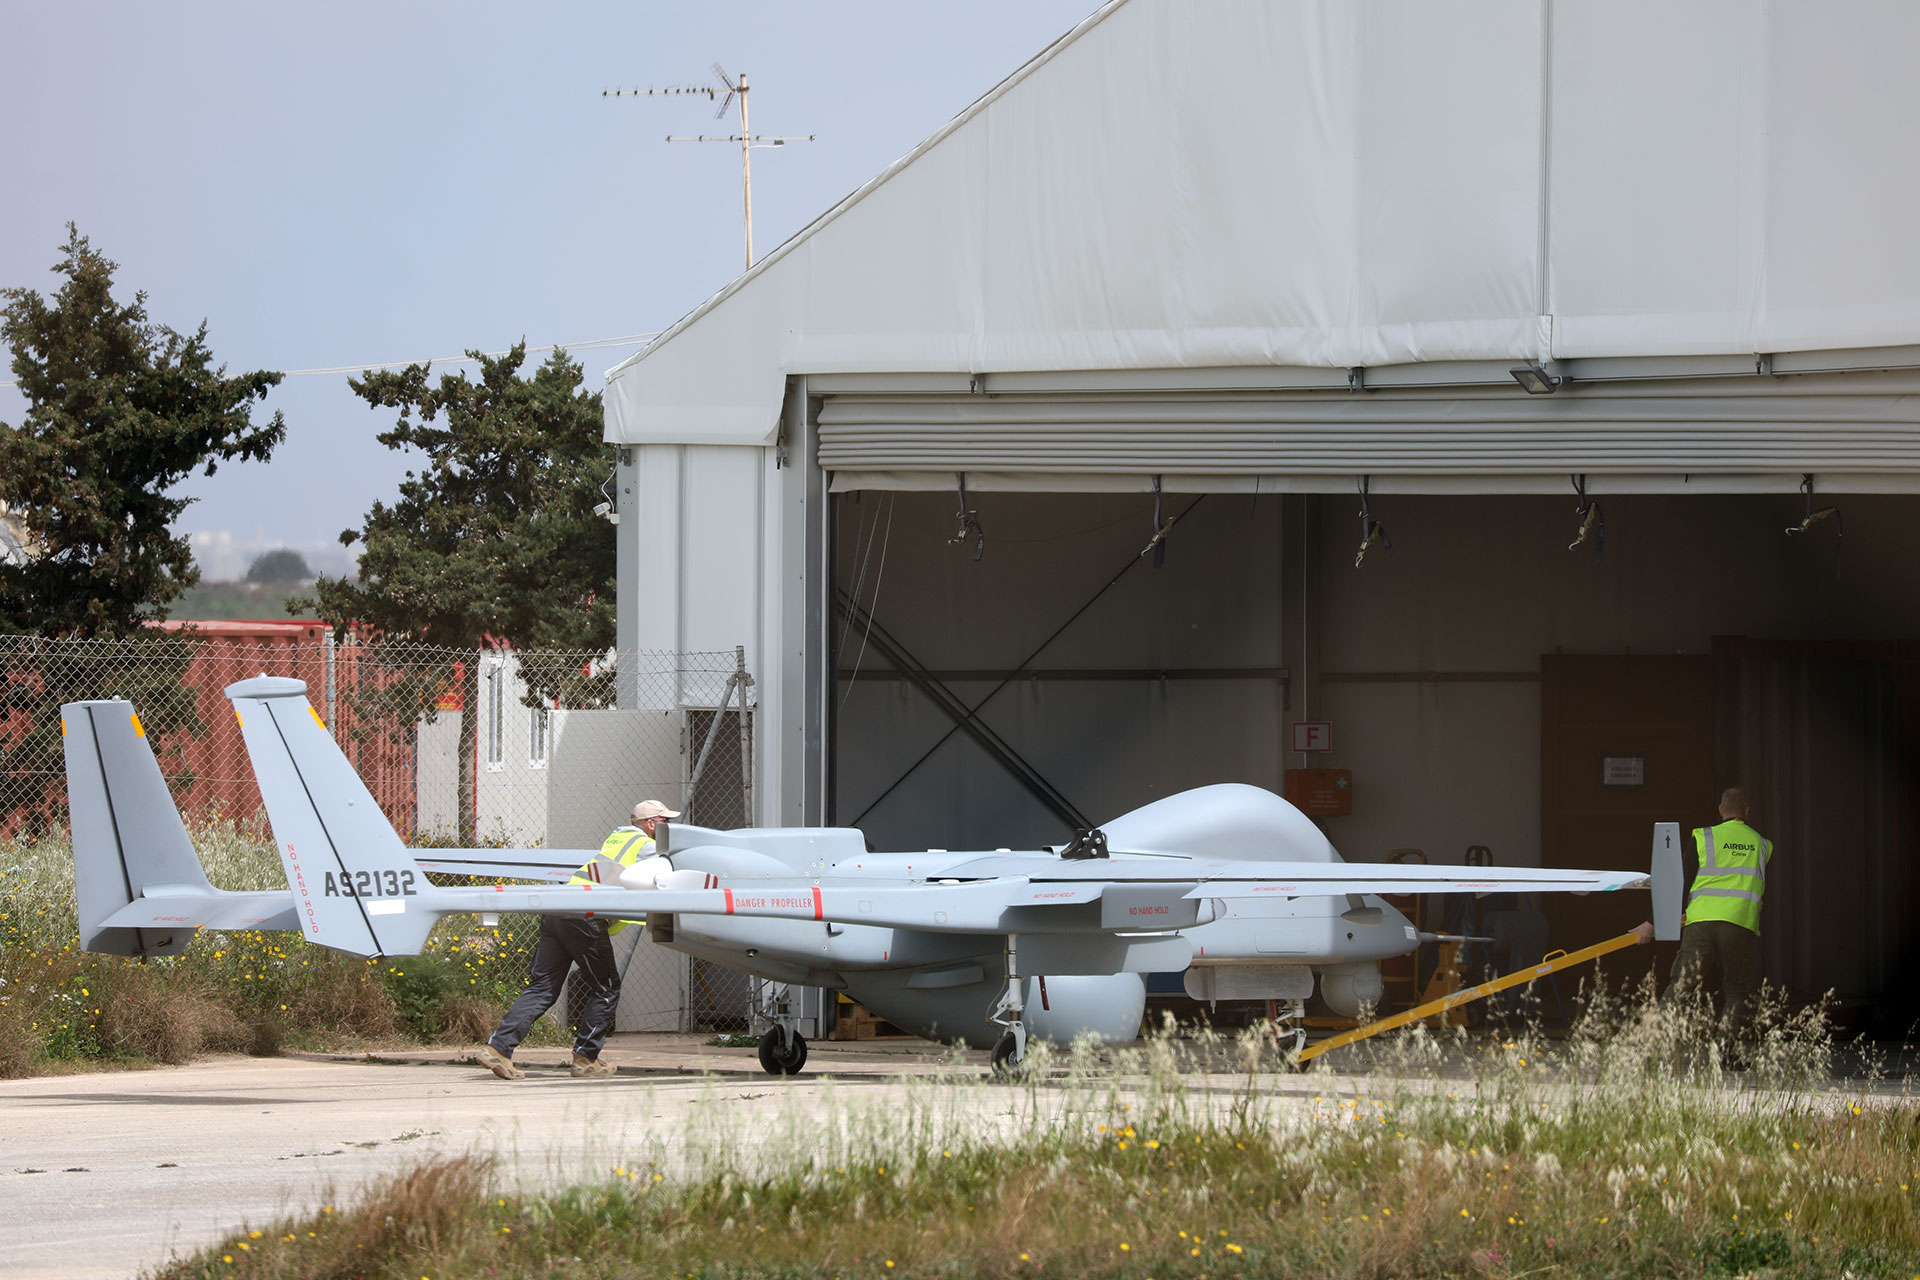 Airbus drone operators push the drone inside its hangar.